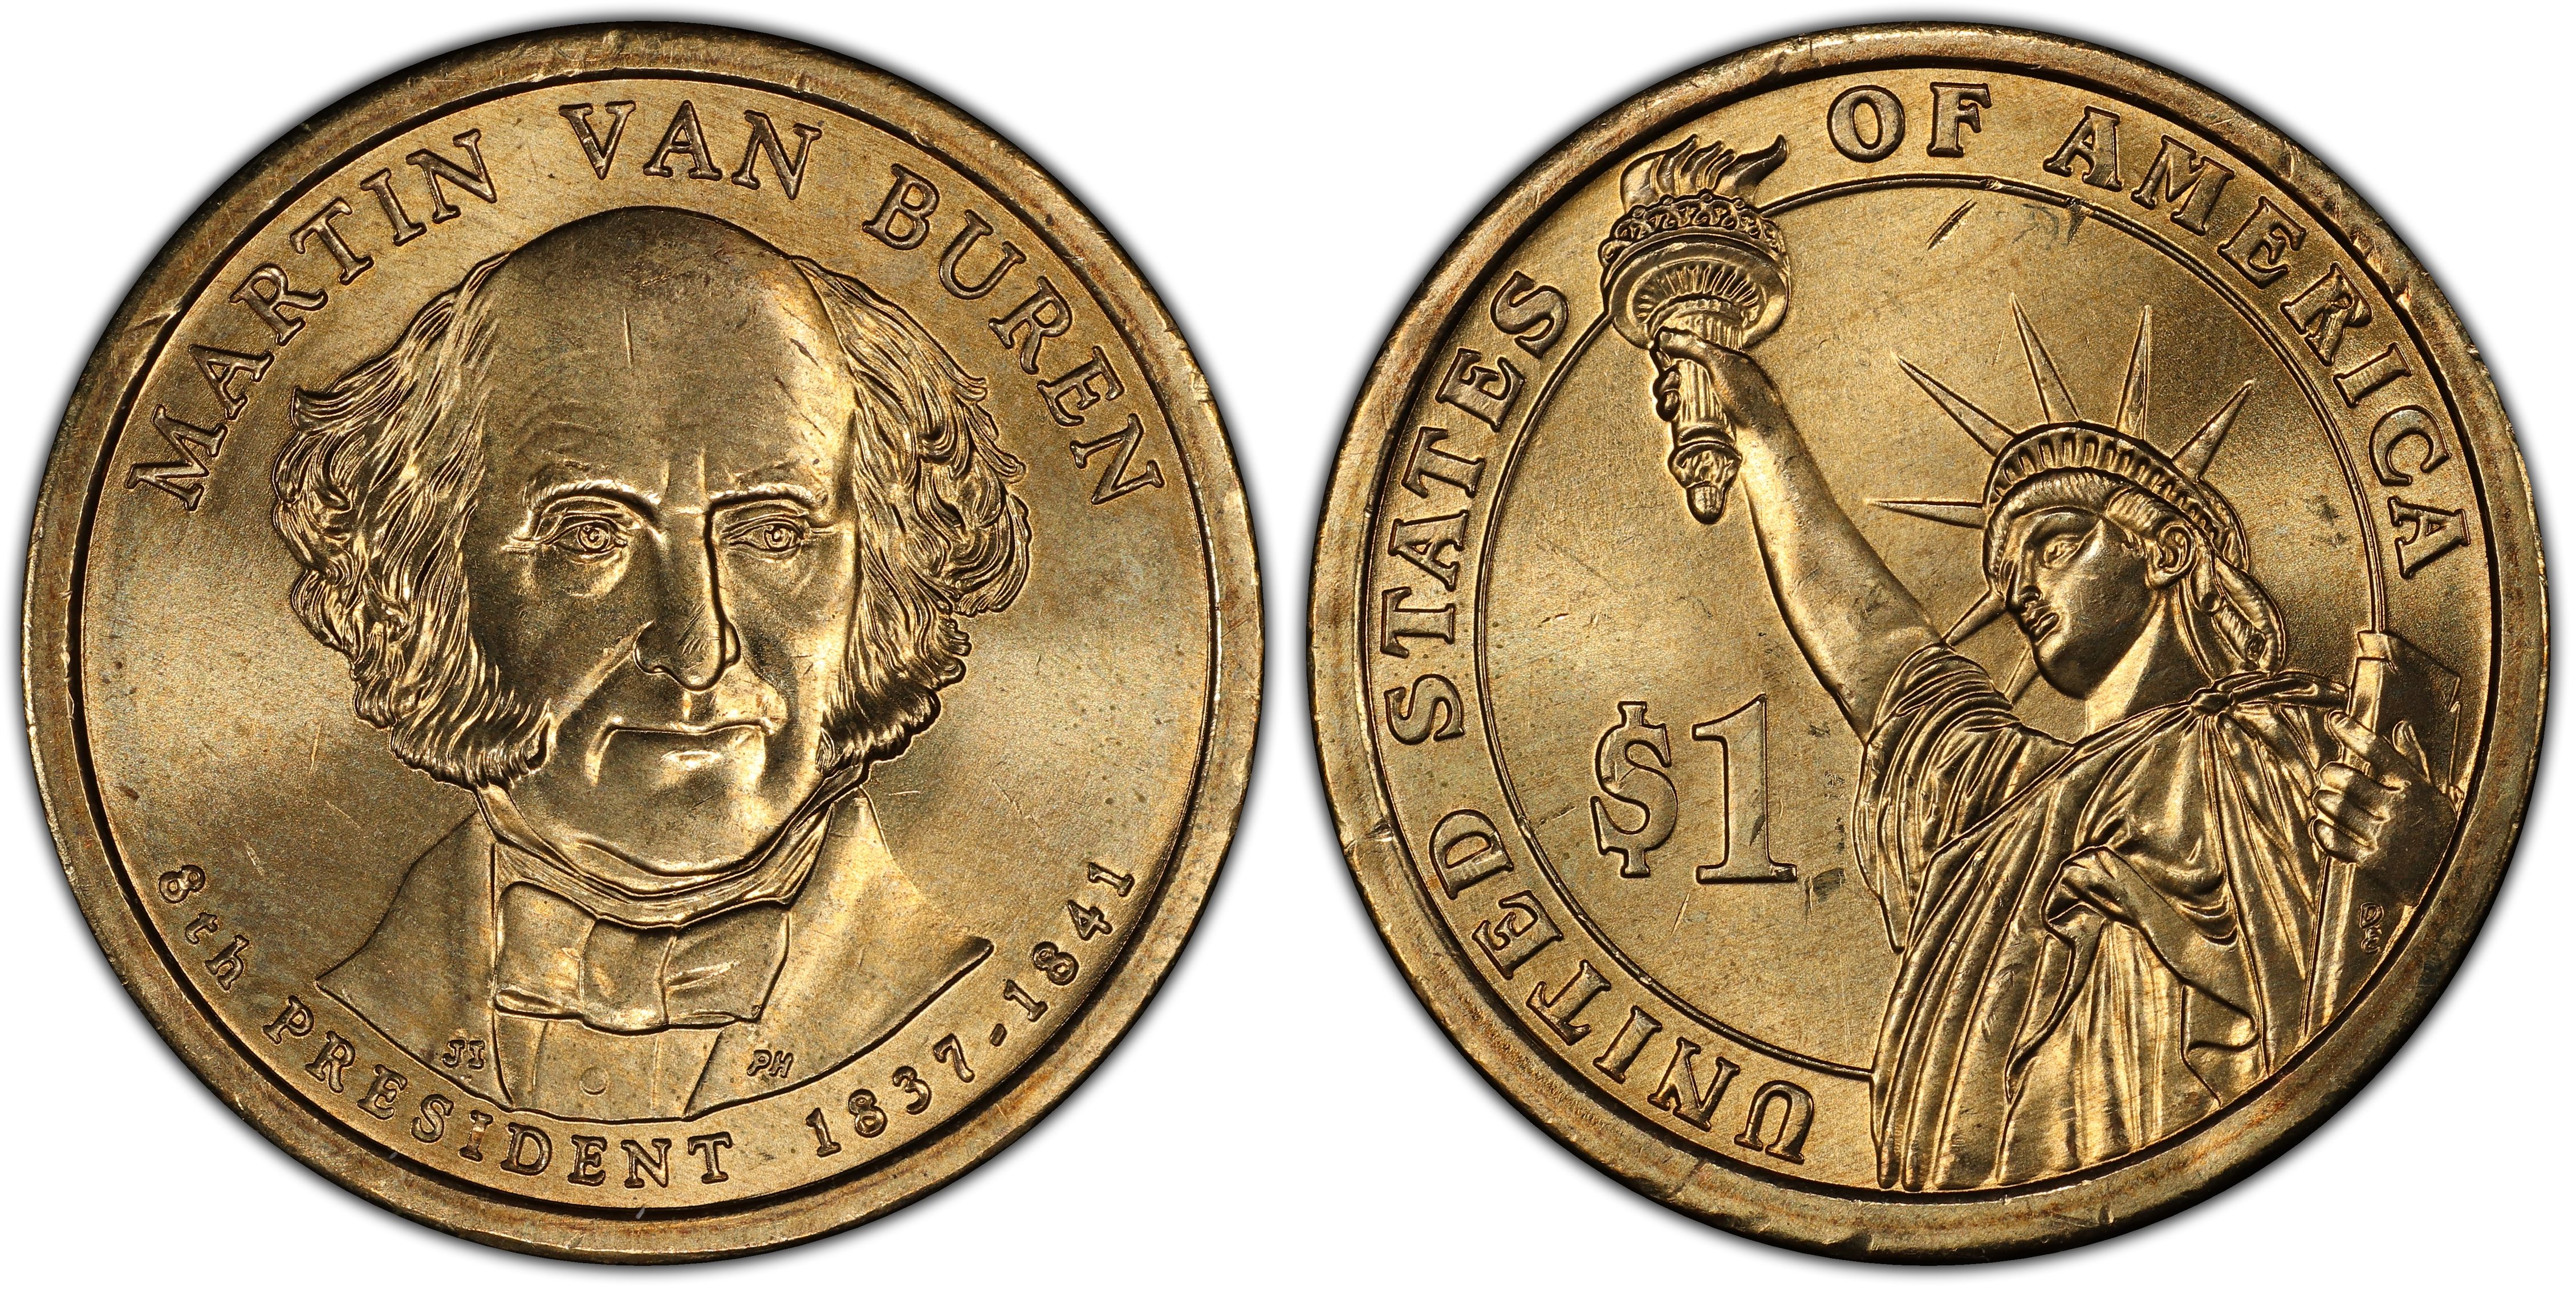 3 Coin Set 2008 P+D+S Martin Van Buren Presidential Dollars US Mint  "New" 